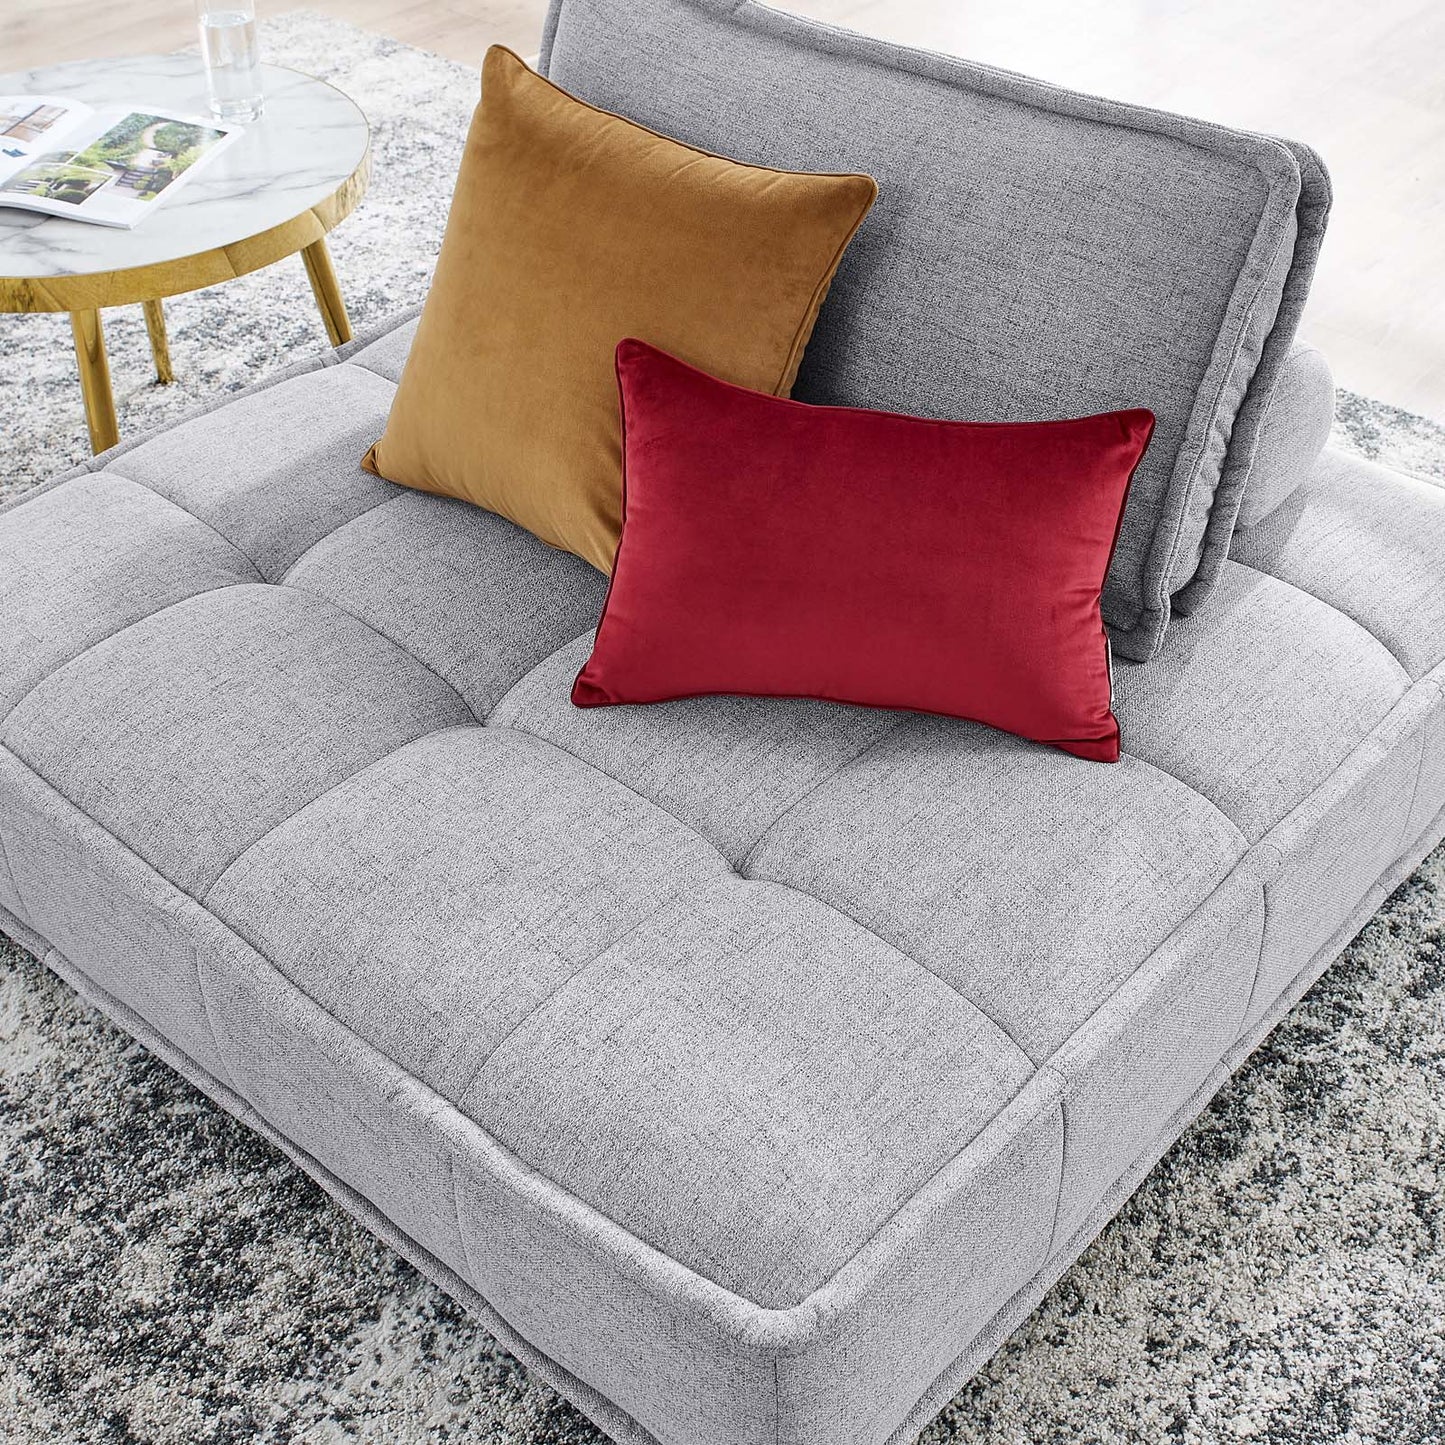 Saunter Tufted Fabric Armless Chair Light Gray EEI-4725-LGR